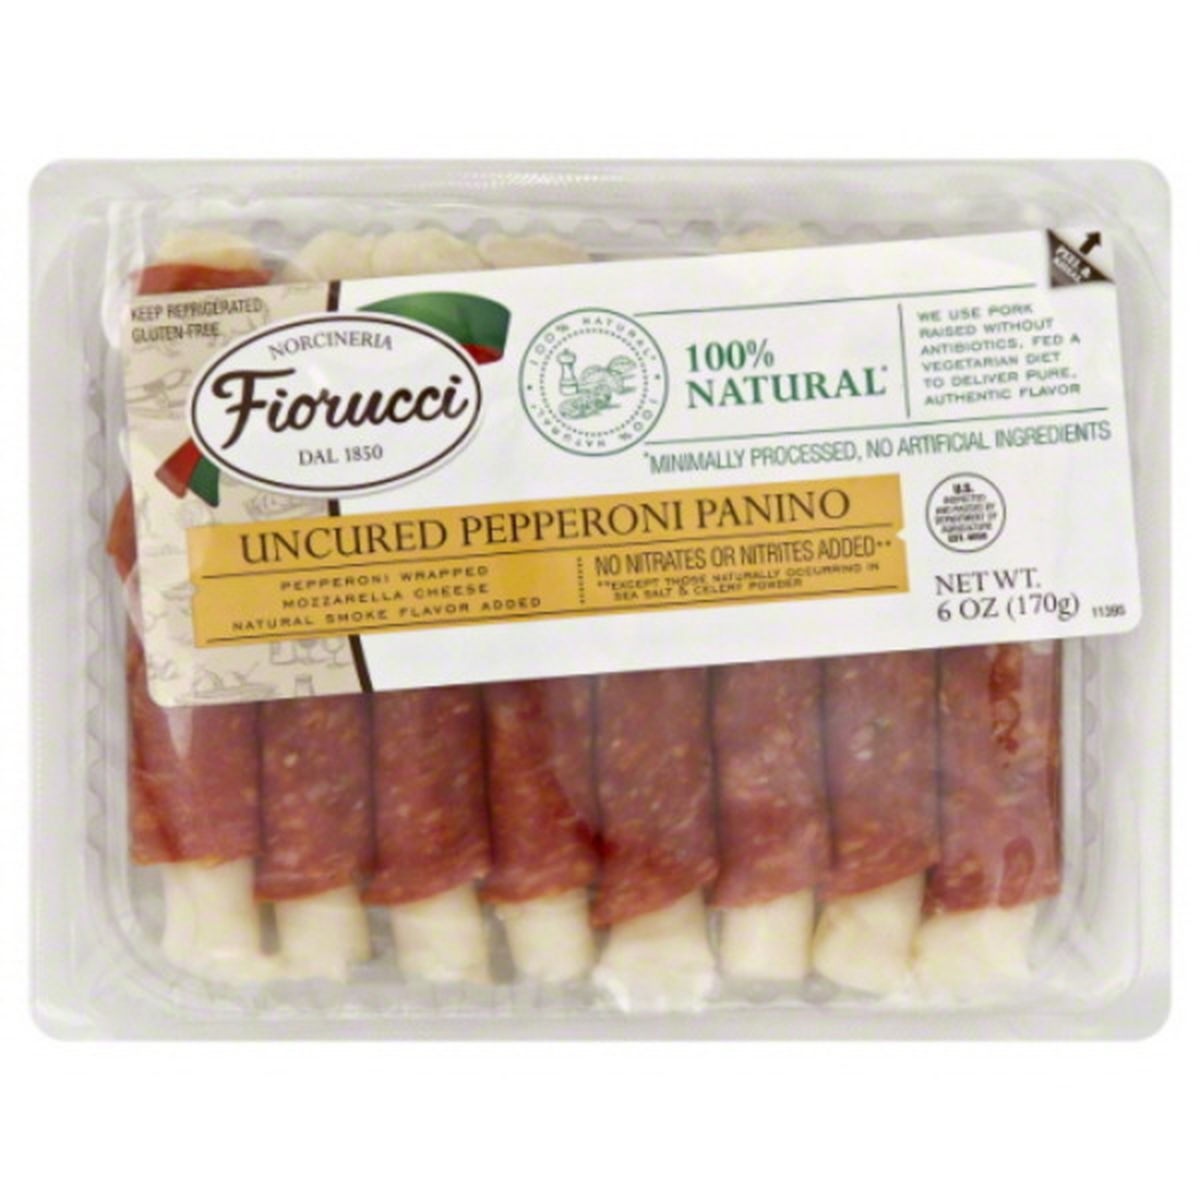 Calories in Fiorucci Pepperoni Panino, Uncured